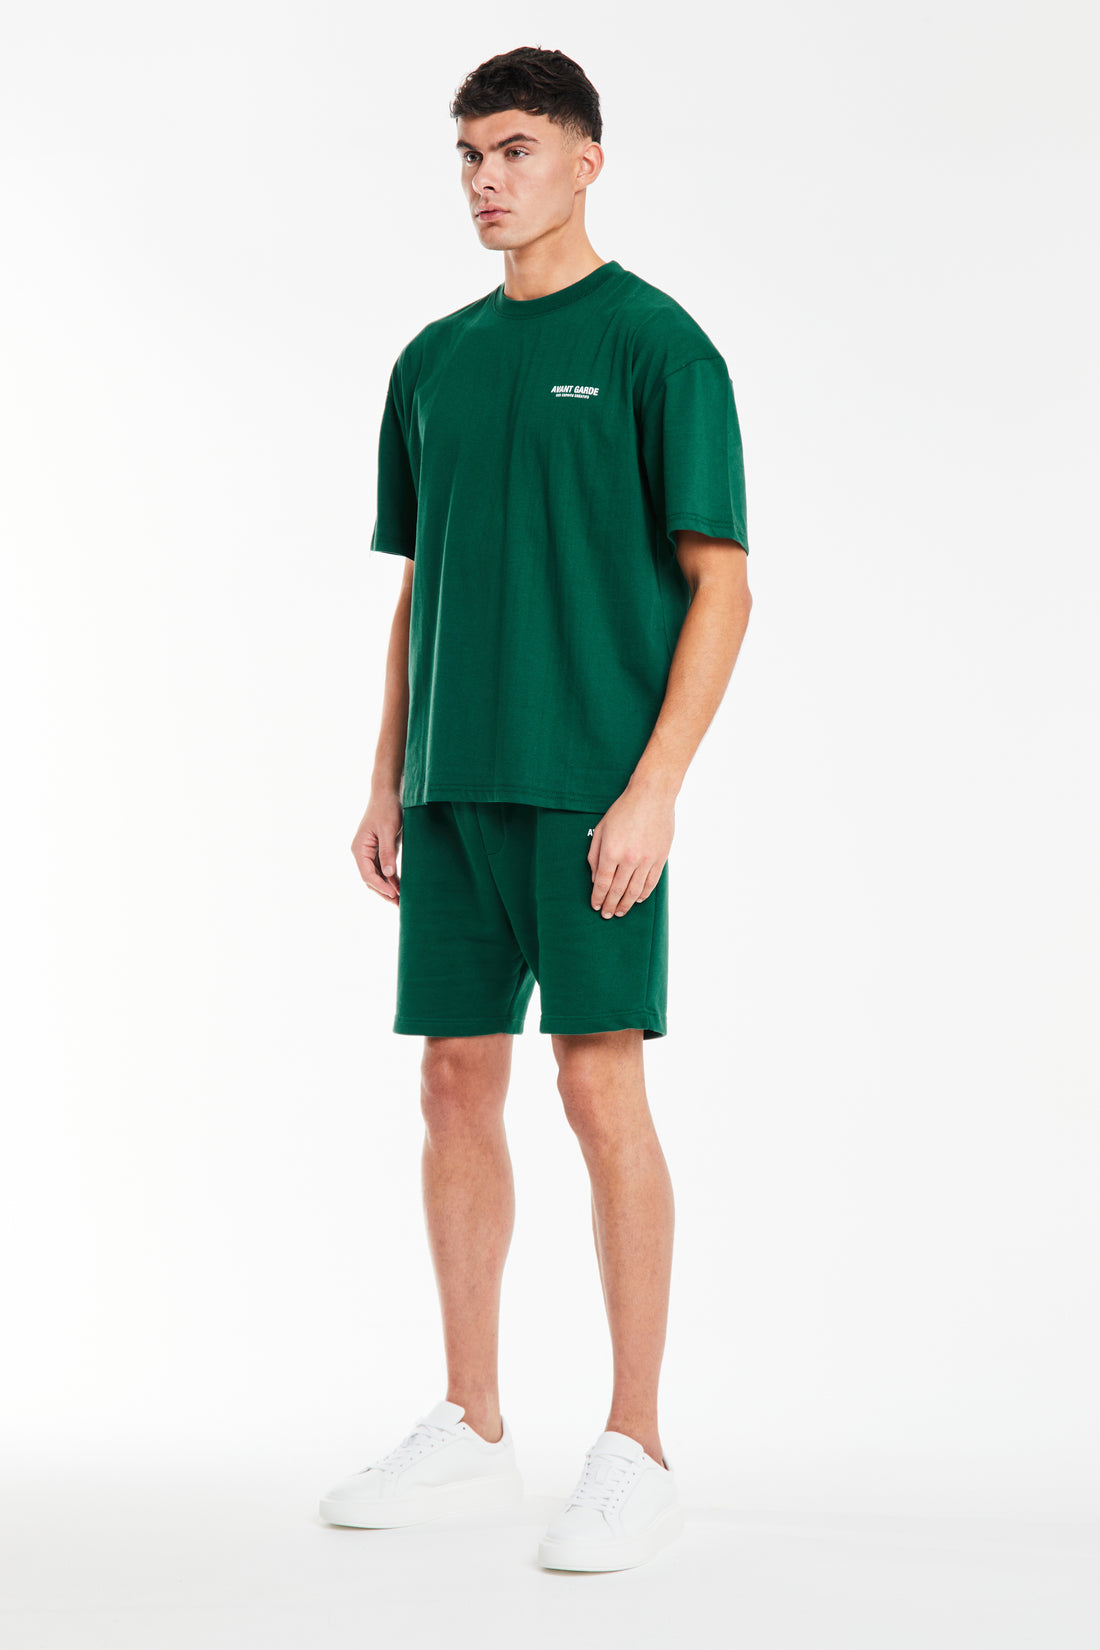 'creatives' jersey shorts in emerald